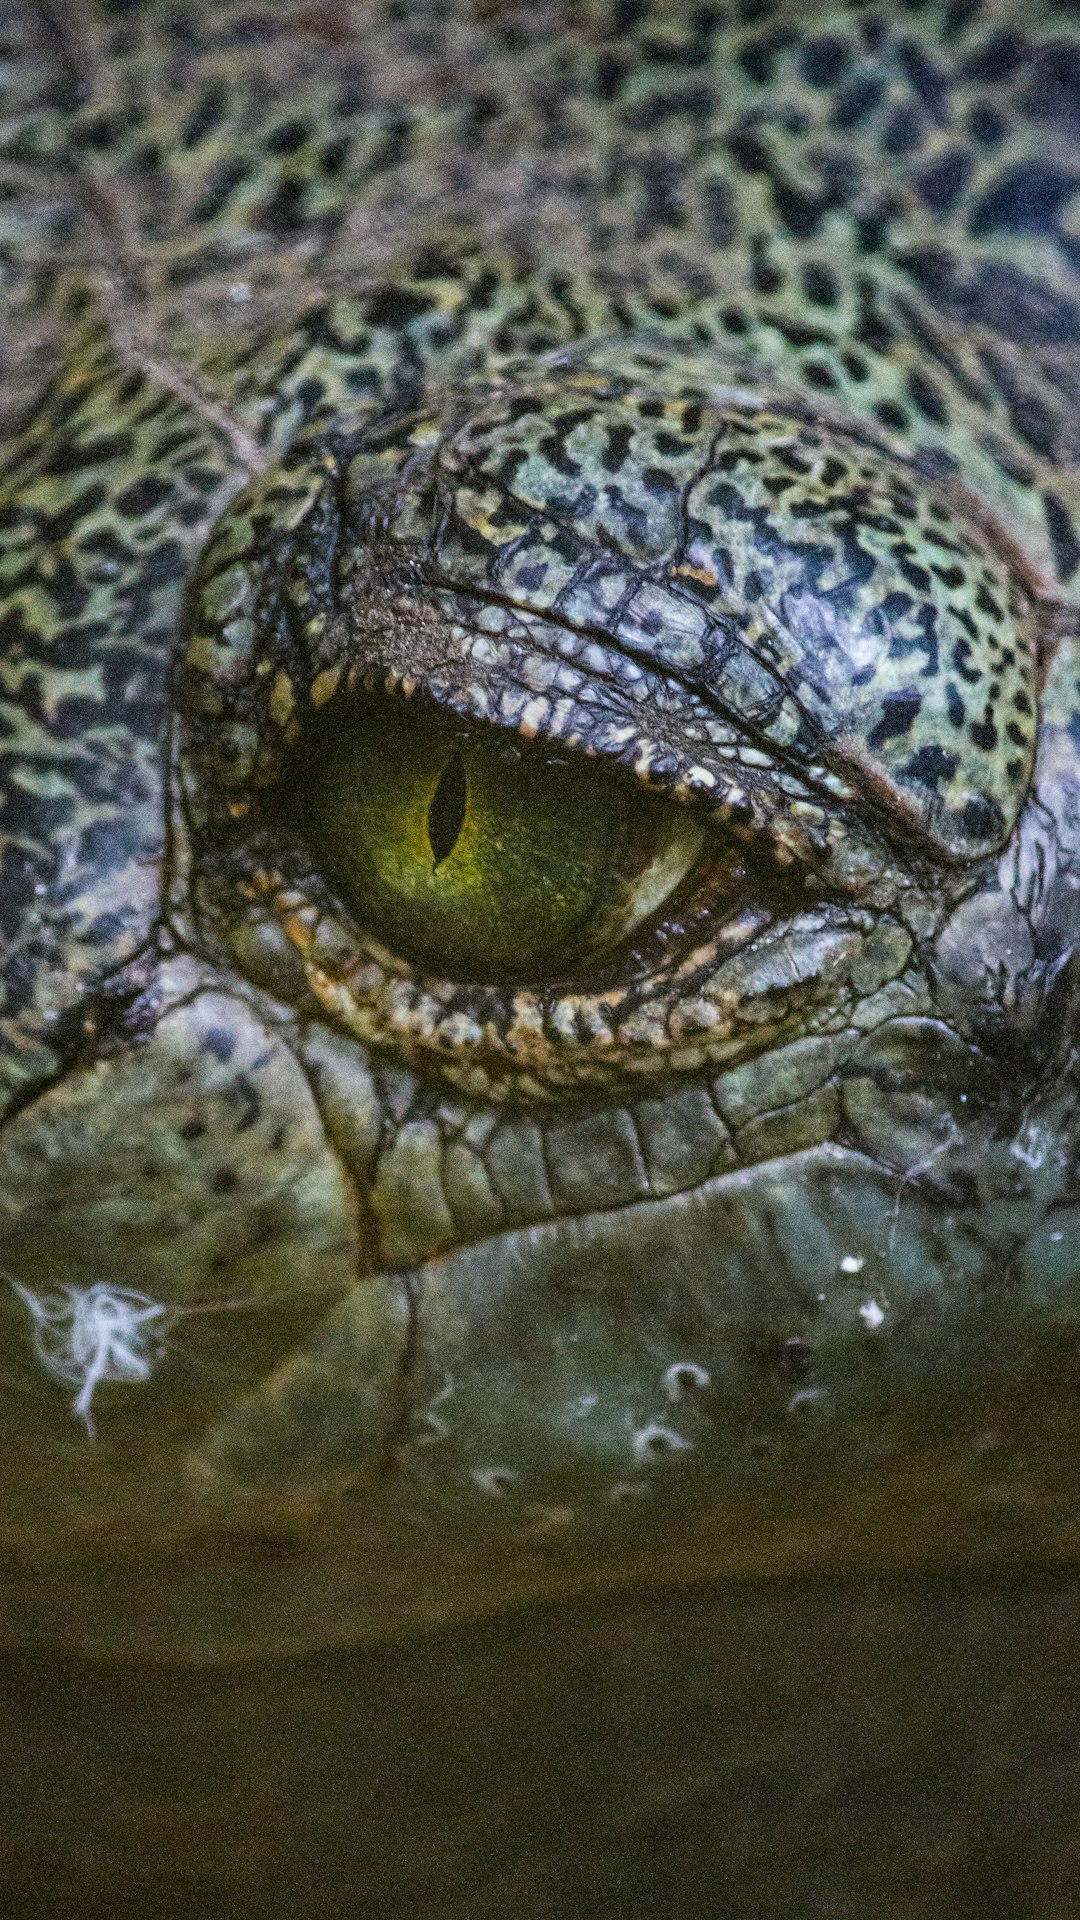  close up photography of crocodile alligator